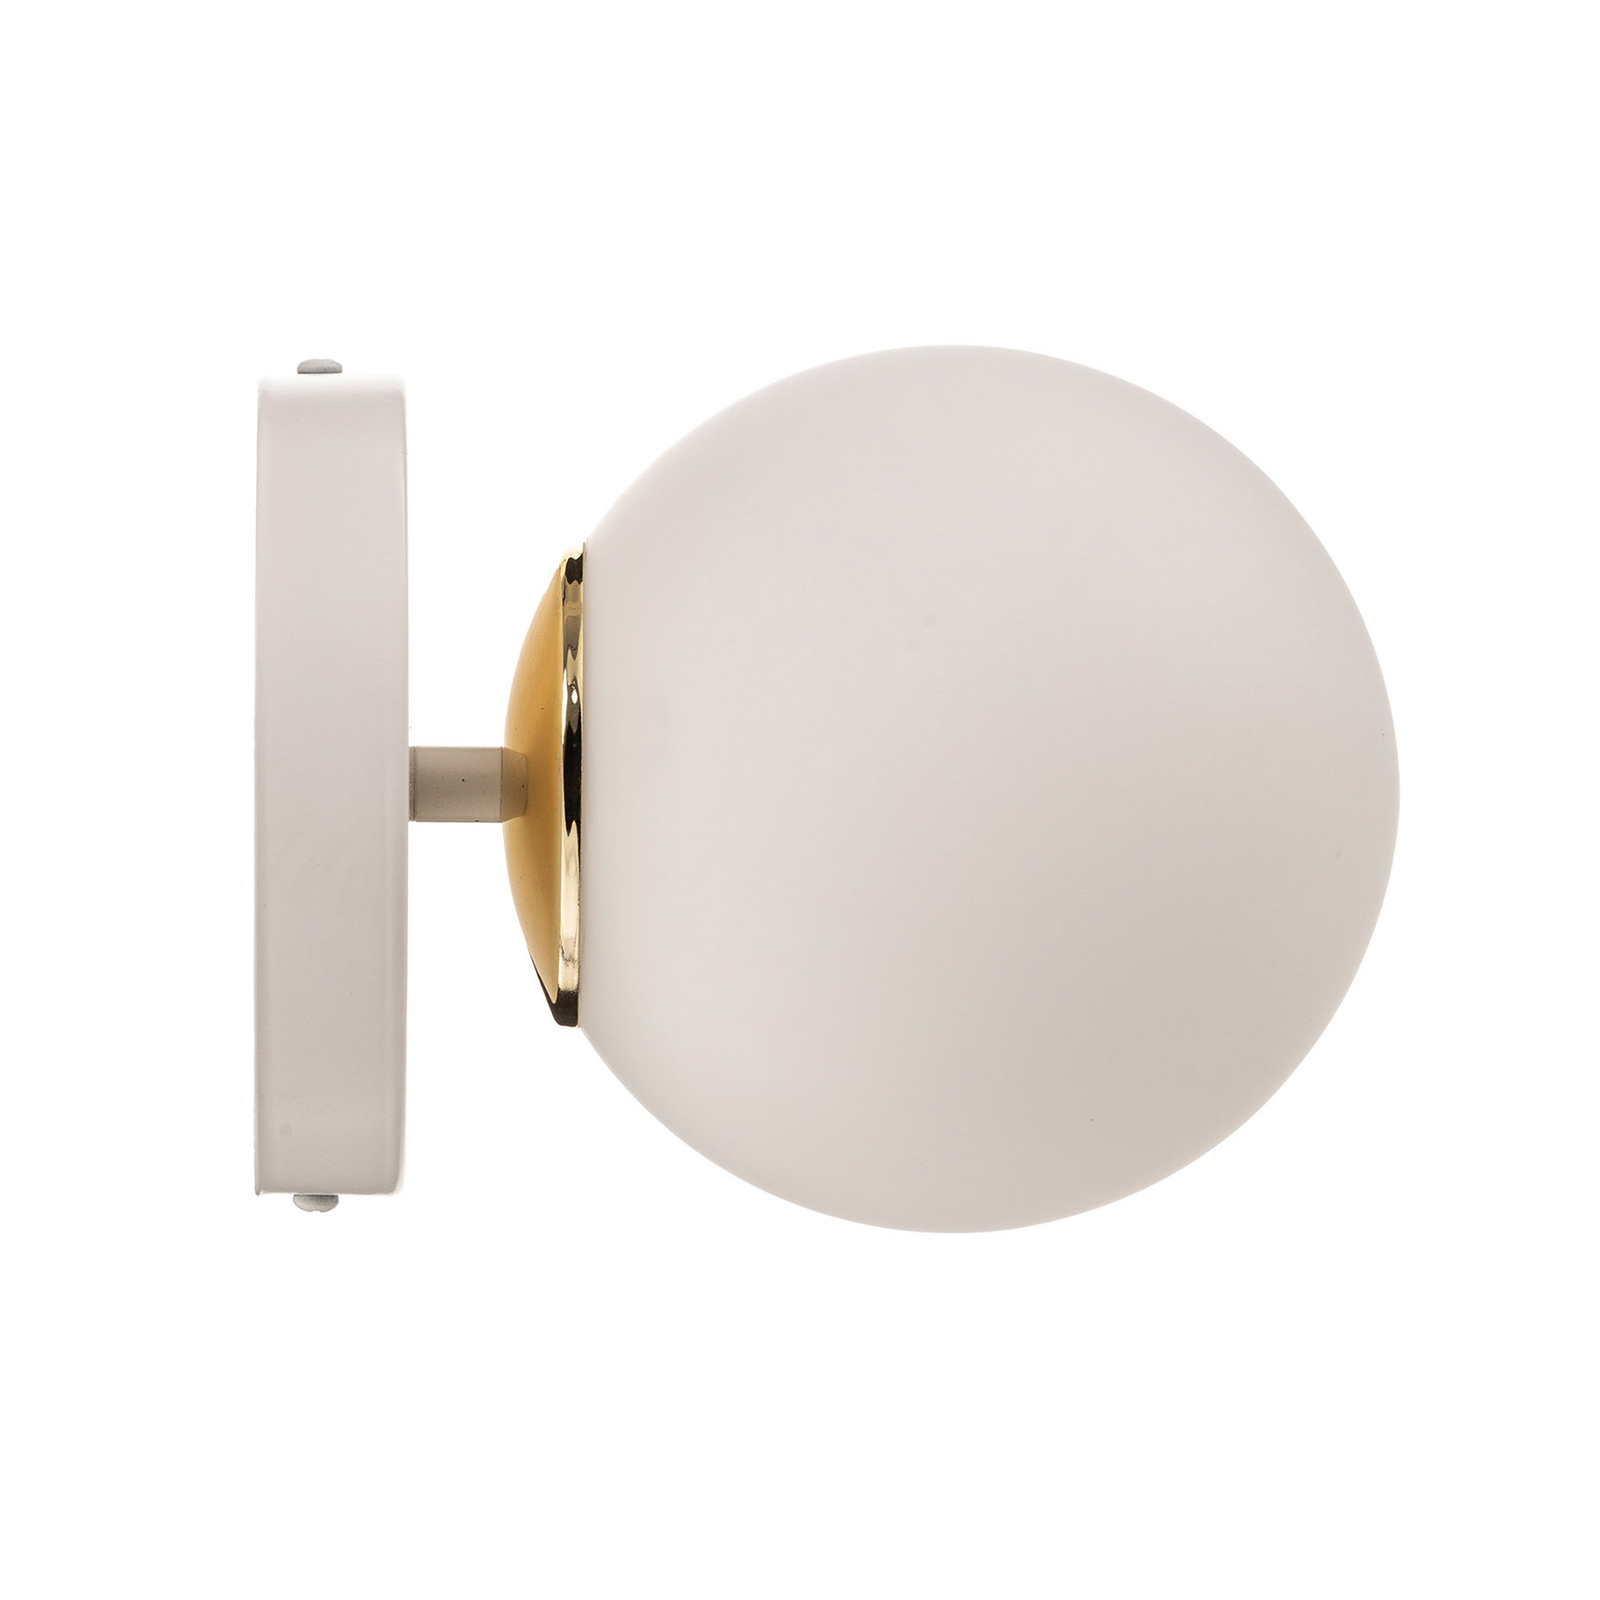 Kiba wall lamp, white/gold, glass globe lampshade